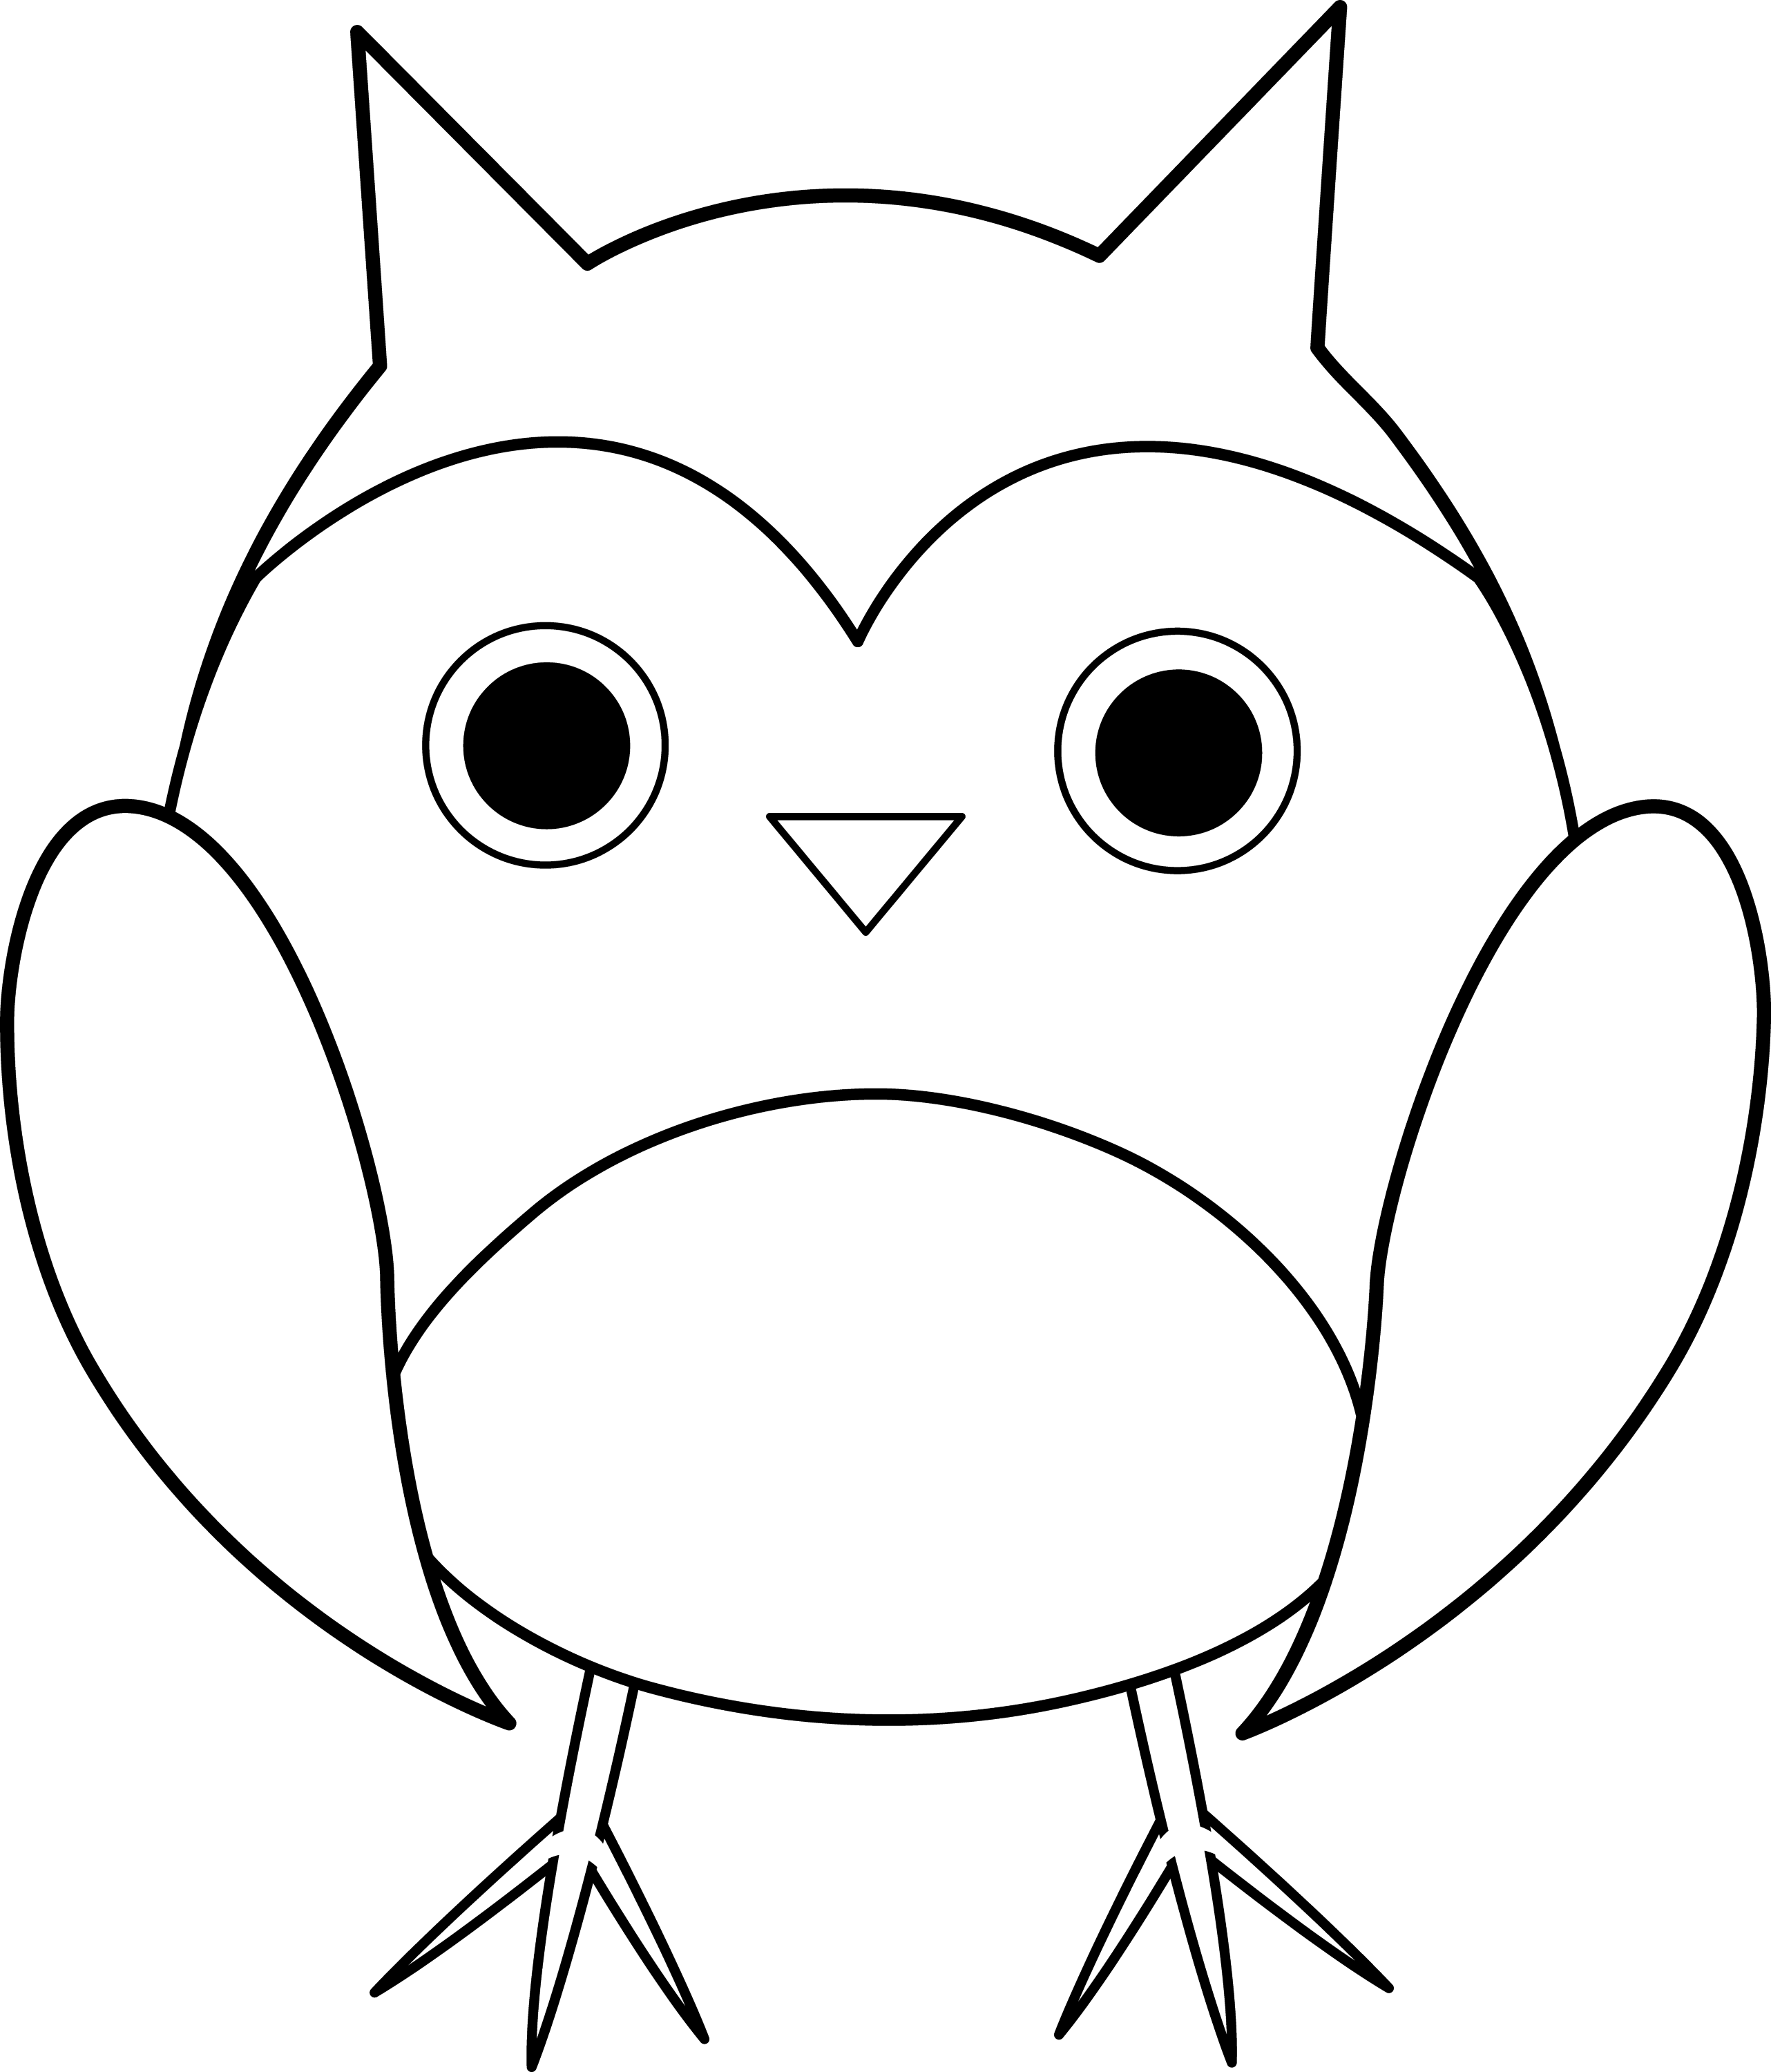 Owl Cartoon Black And White